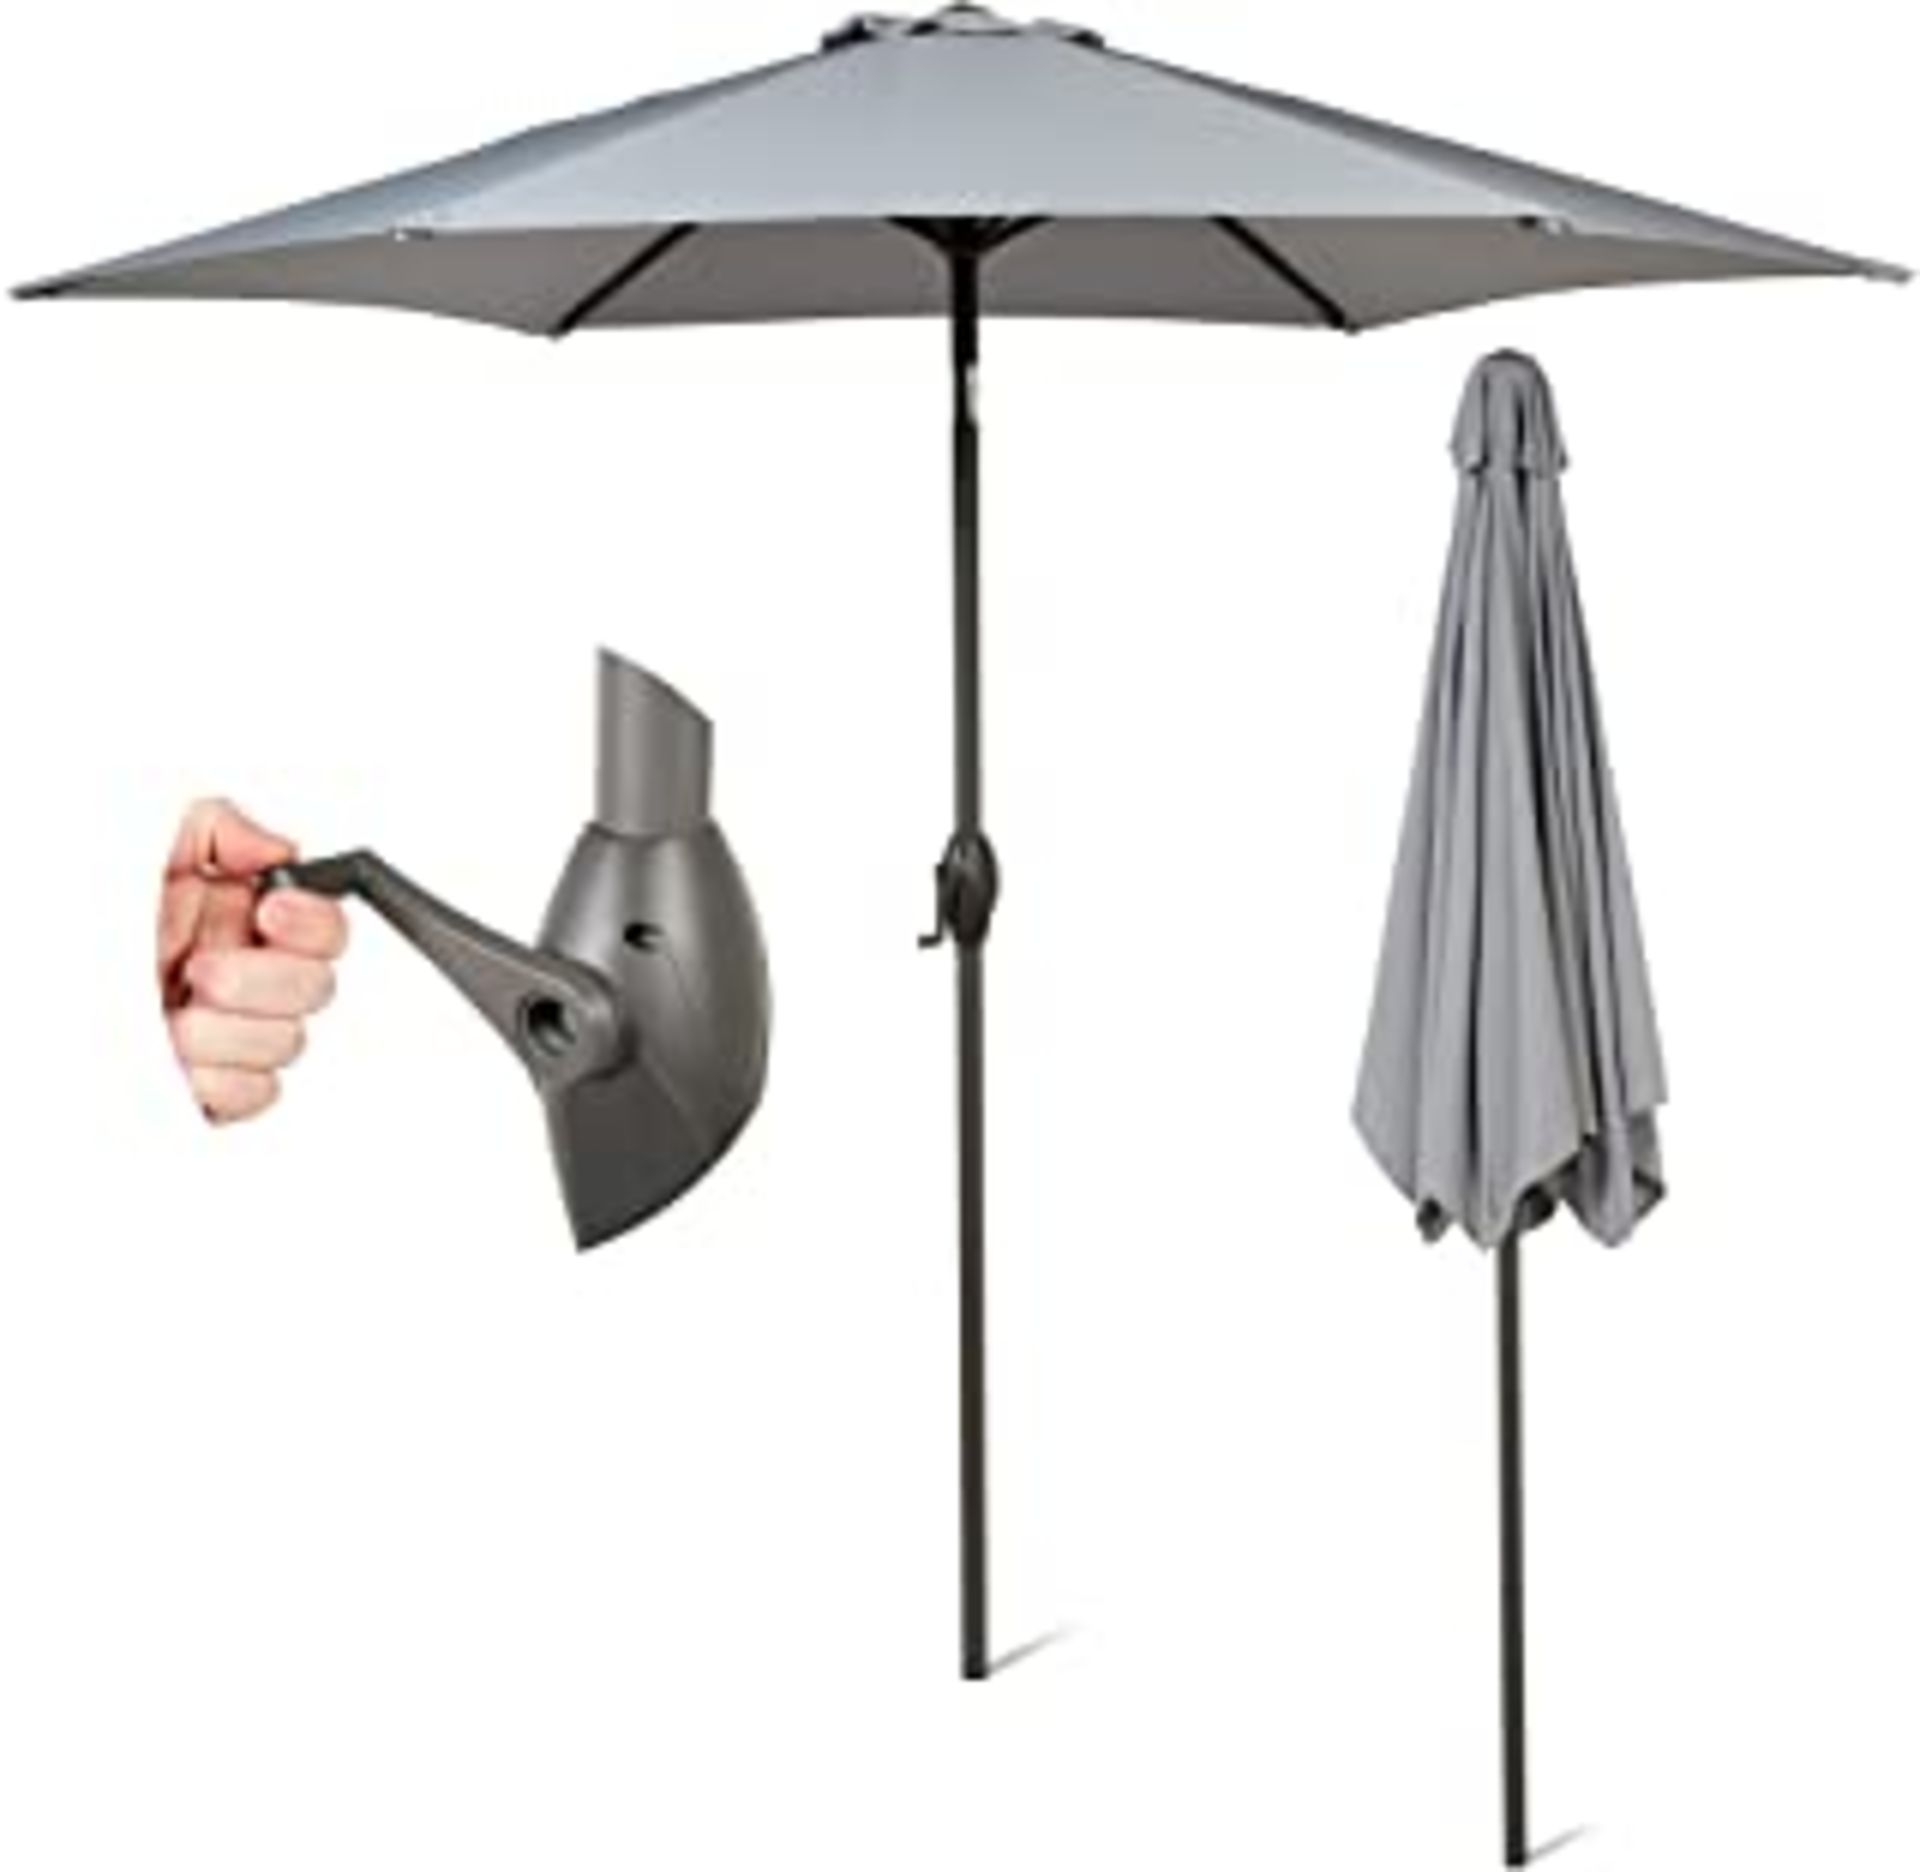 4x Crank Handle umbrella - Grey - Image 2 of 2